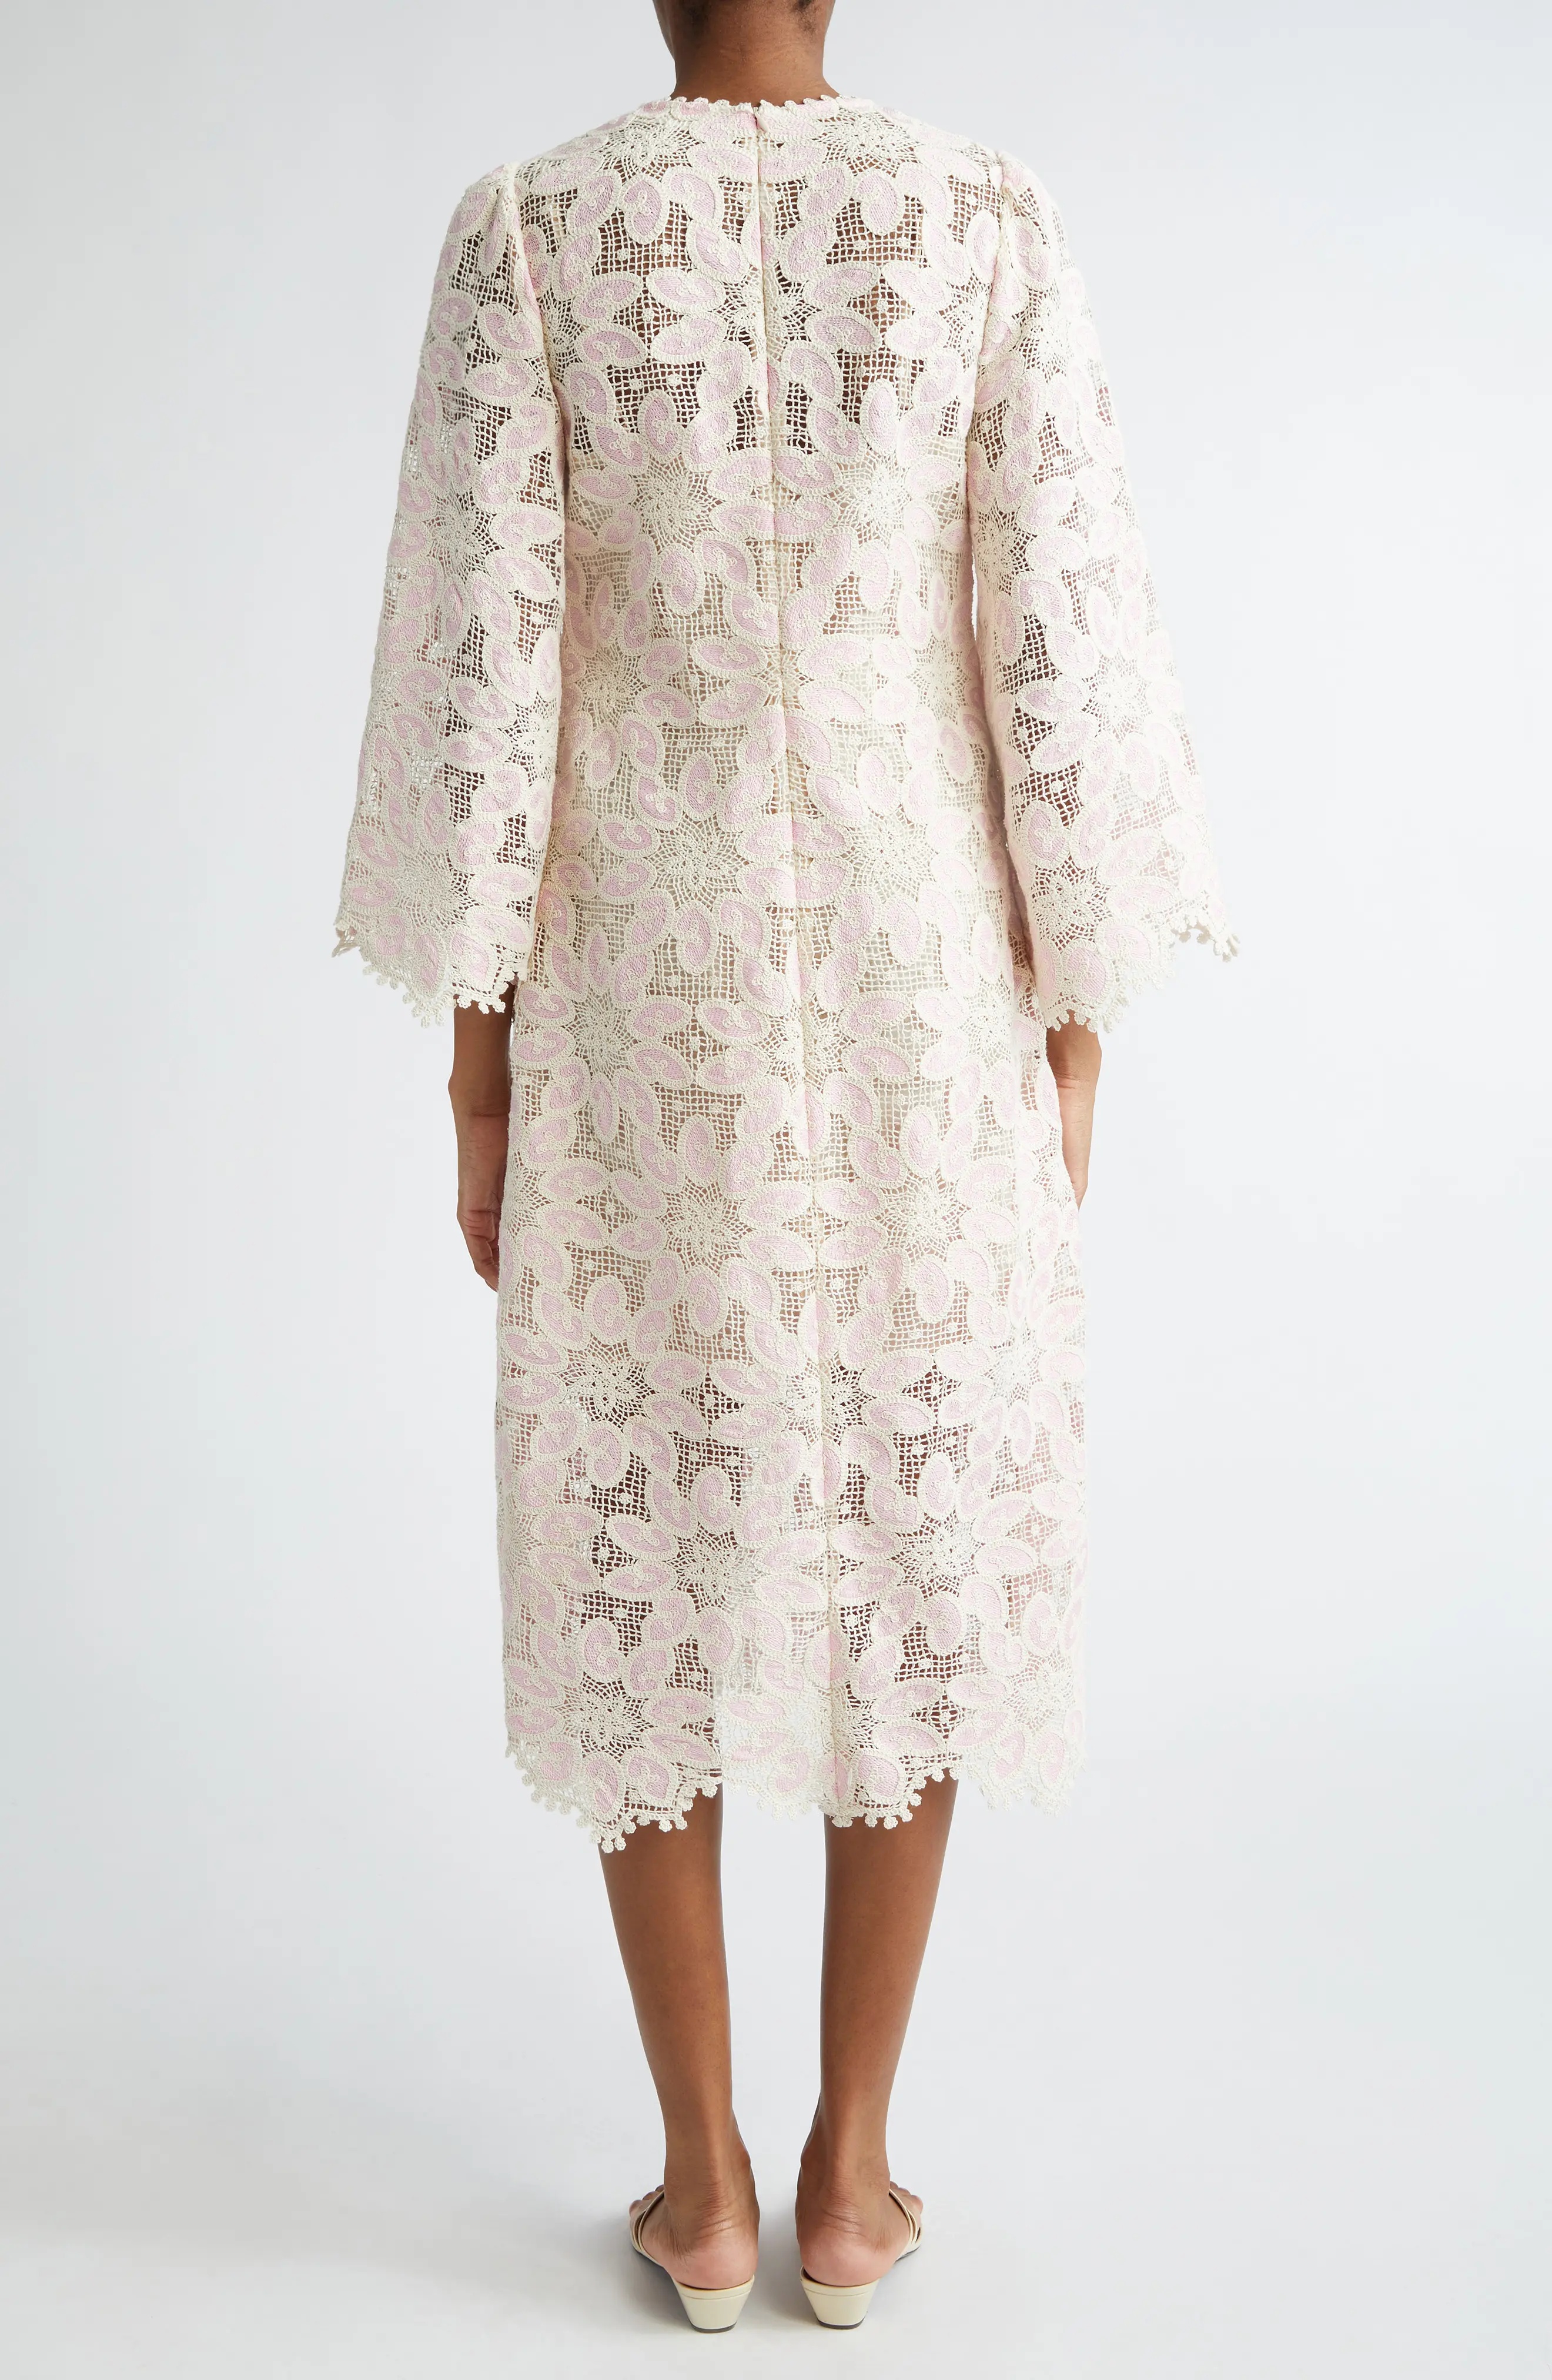 Ottie Long Sleeve Guipure Lace Cotton Blend Midi Dress in Cream/Pink - 2